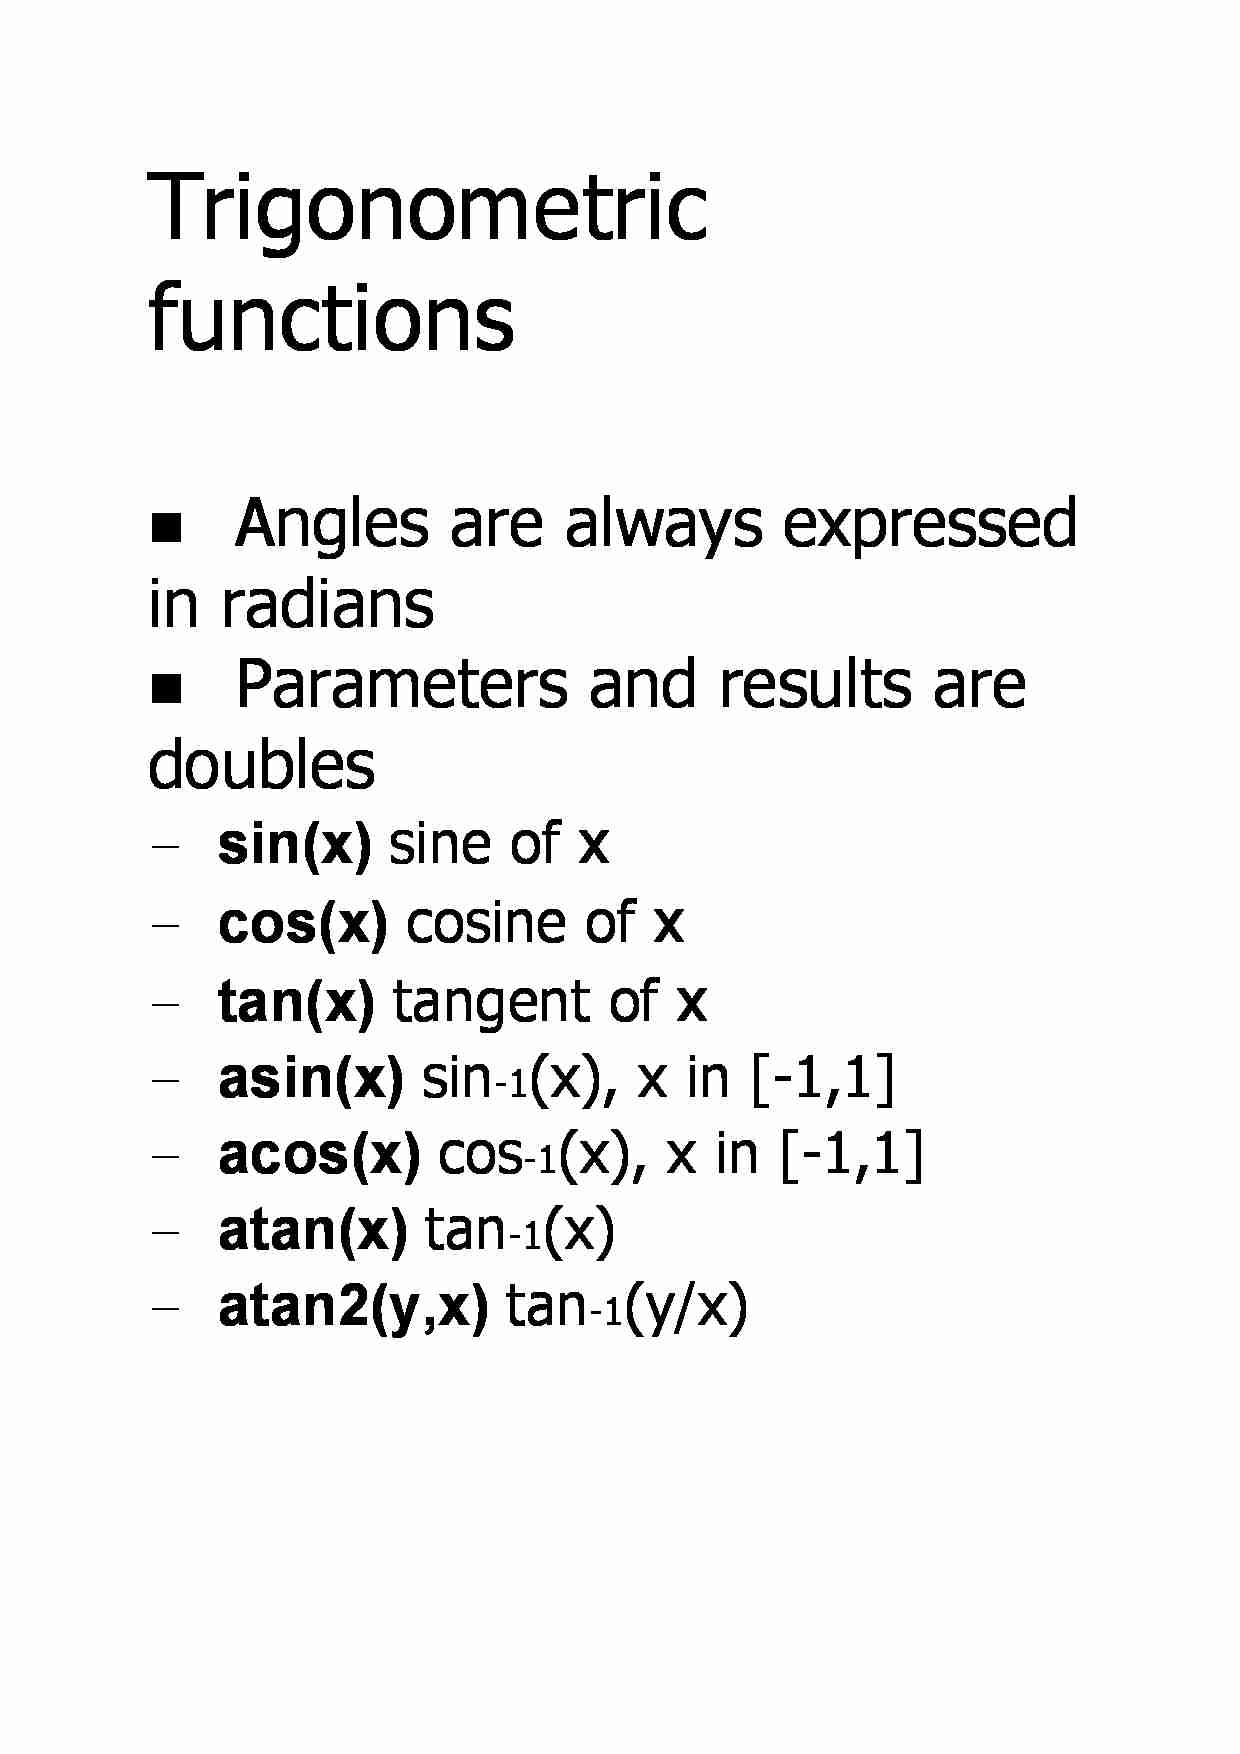 Trigonometric functions - strona 1